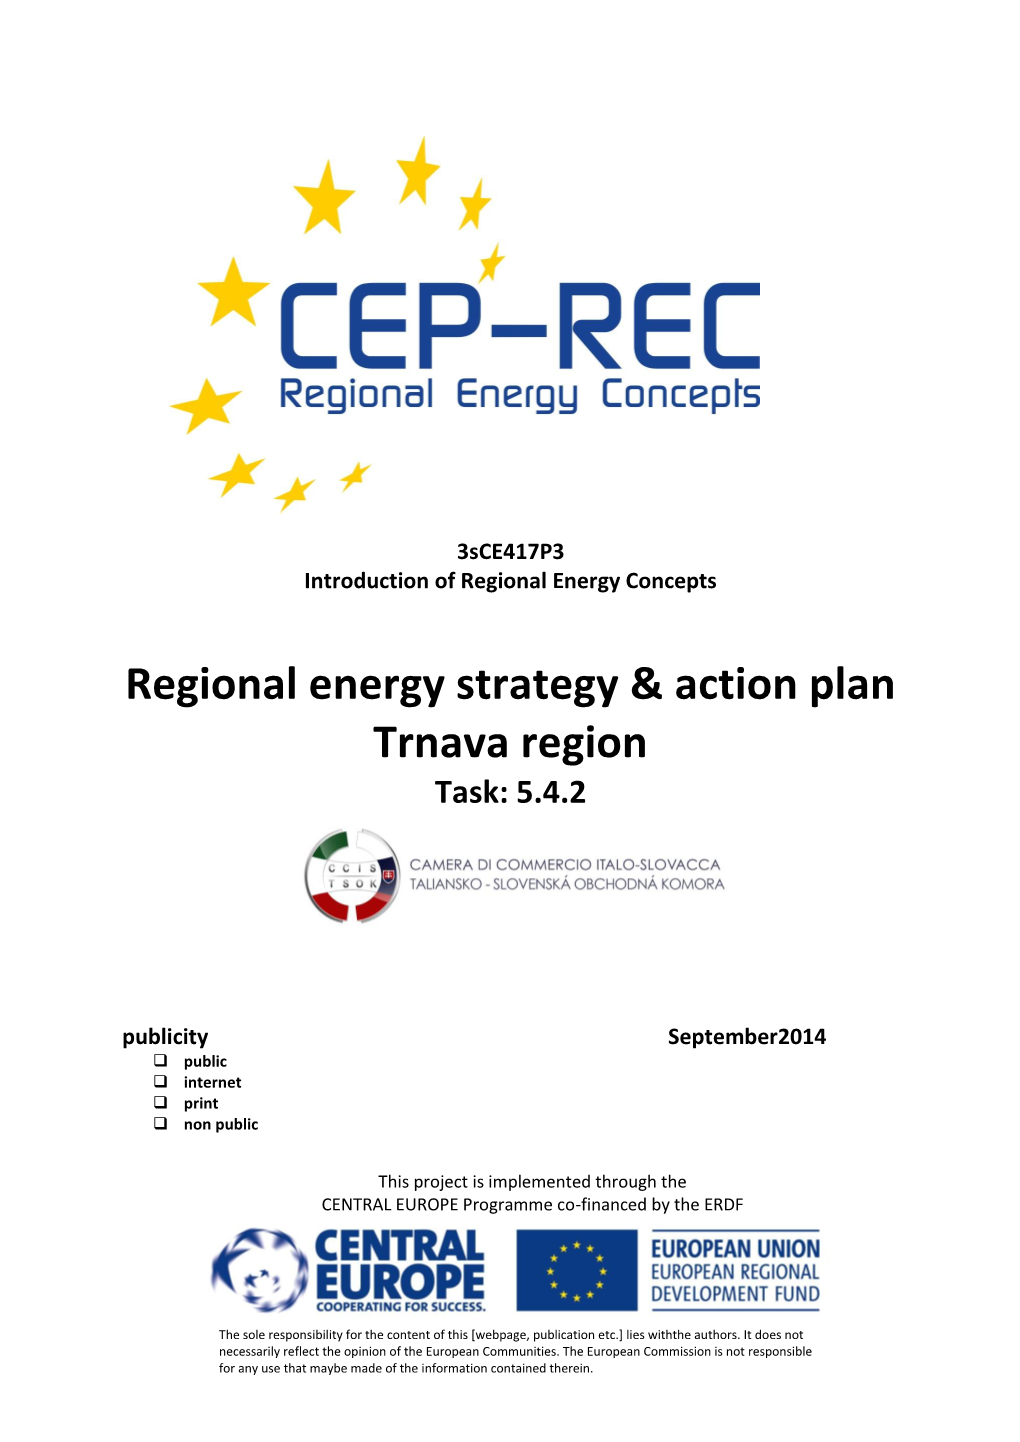 Regional Energy Strategy & Action Plan Trnava Region